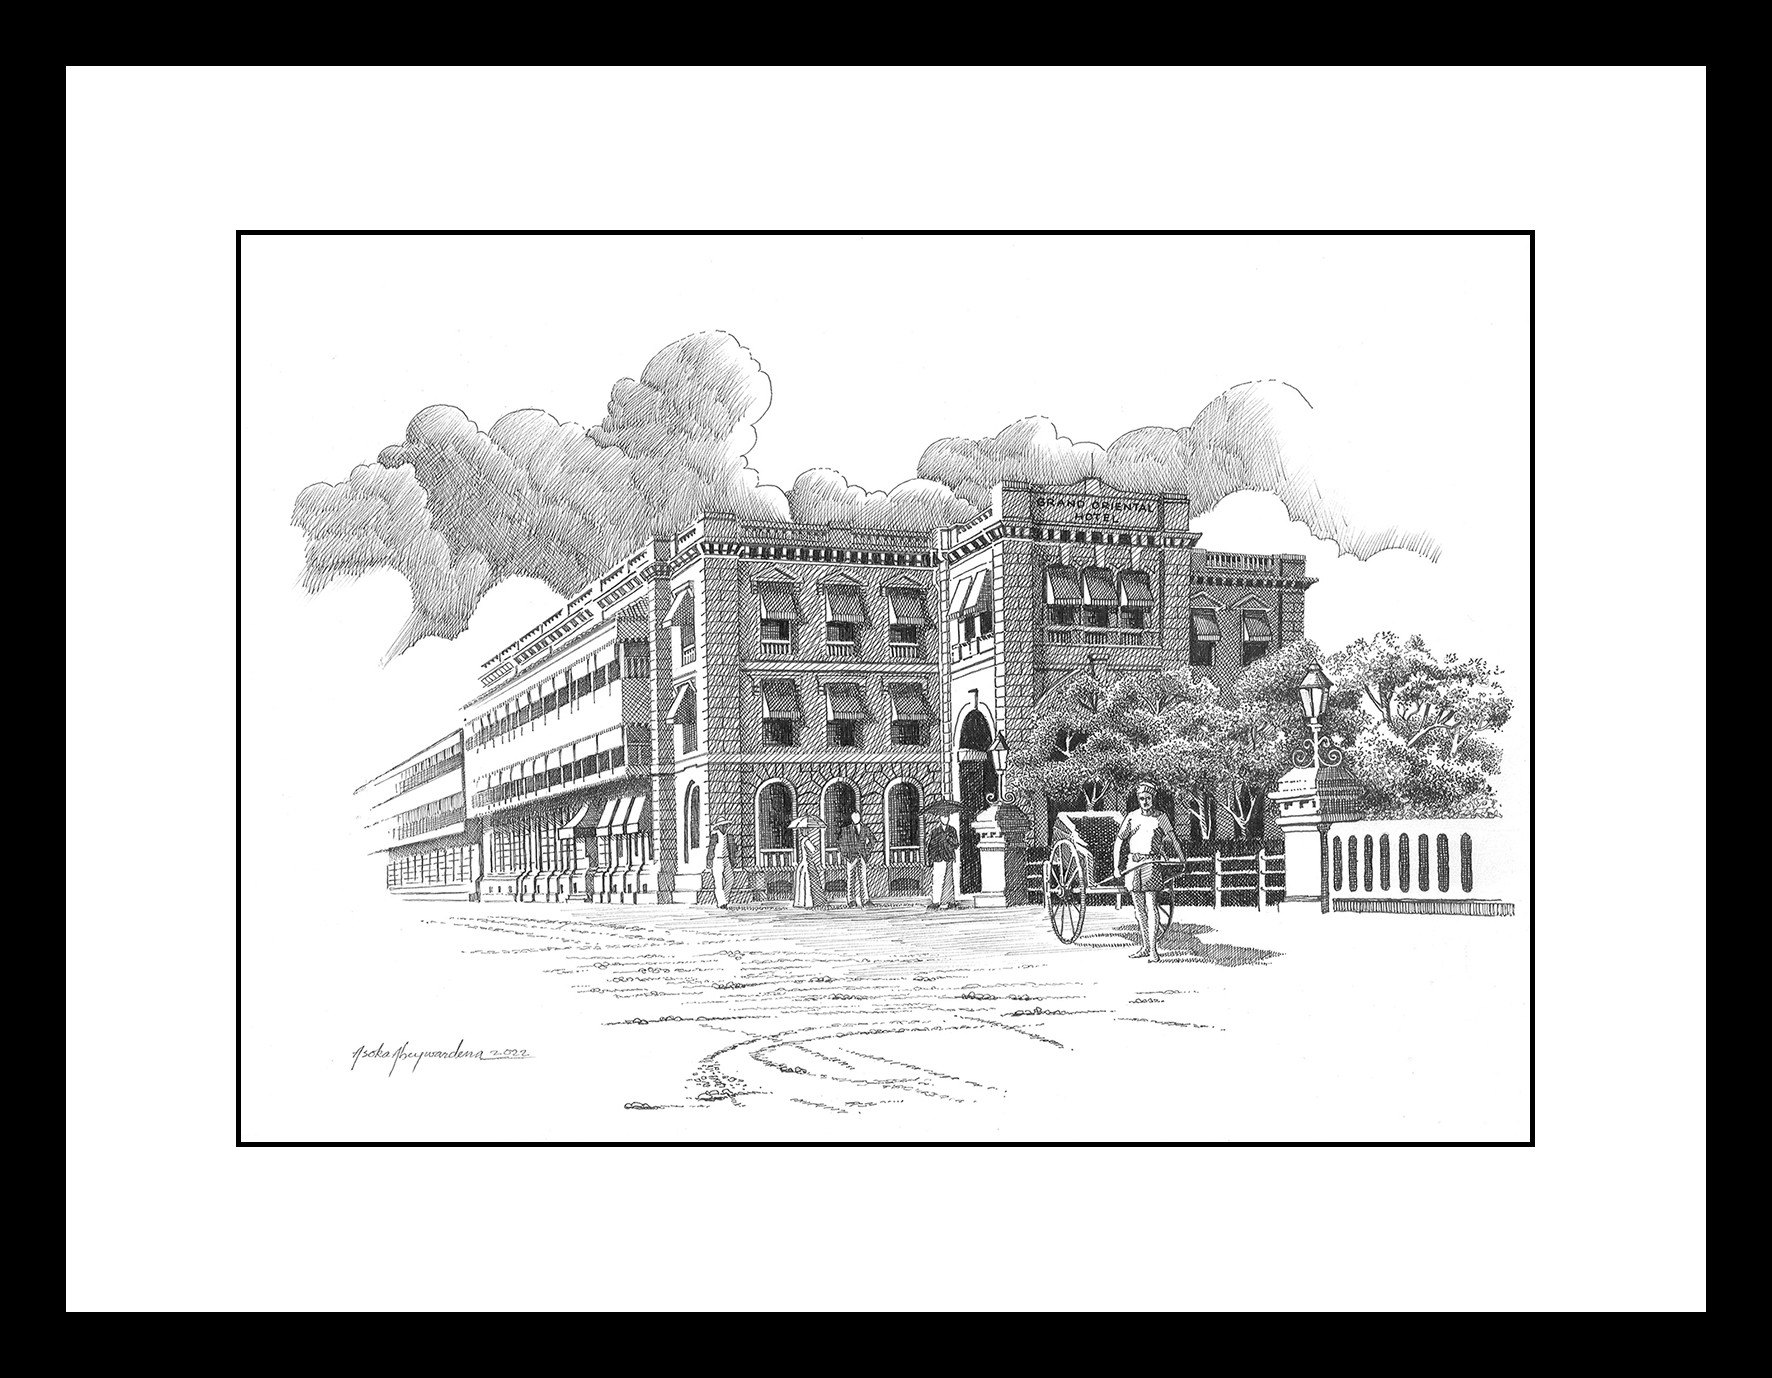 GRAND ORIENTAL HOTEL CEYLON 1880 by ASOKA ABEYWARDENA